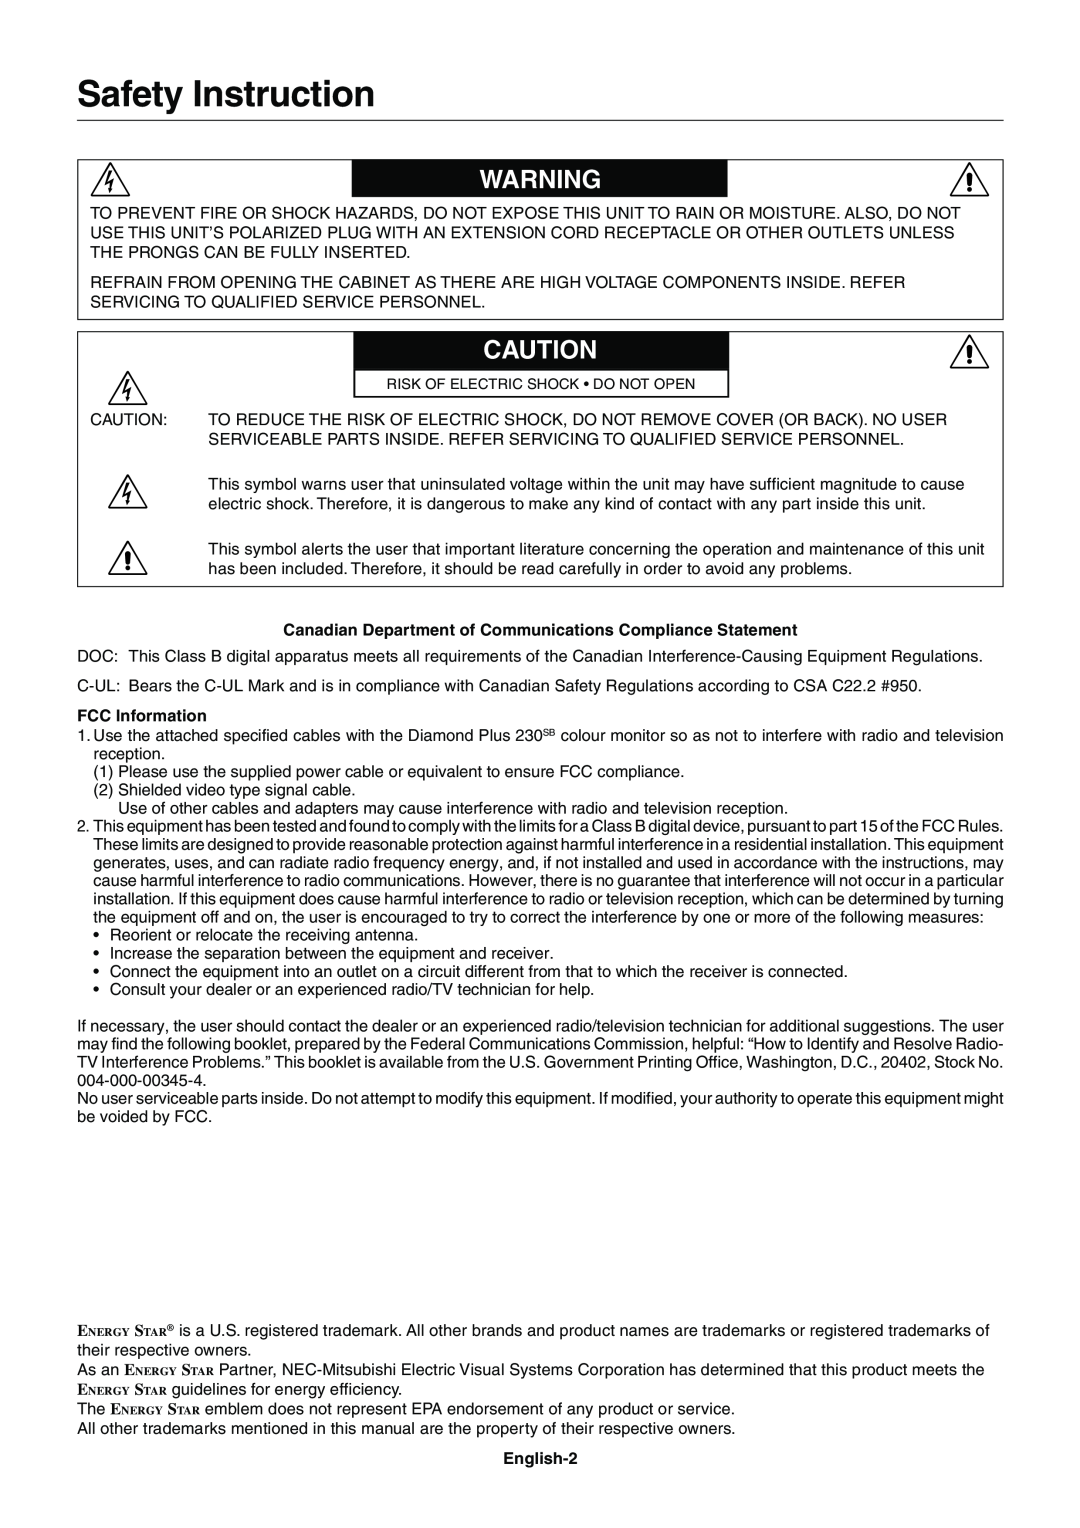 Mitsubishi Electronics 230SB Safety Instruction, Canadian Department of Communications Compliance Statement, English-2 